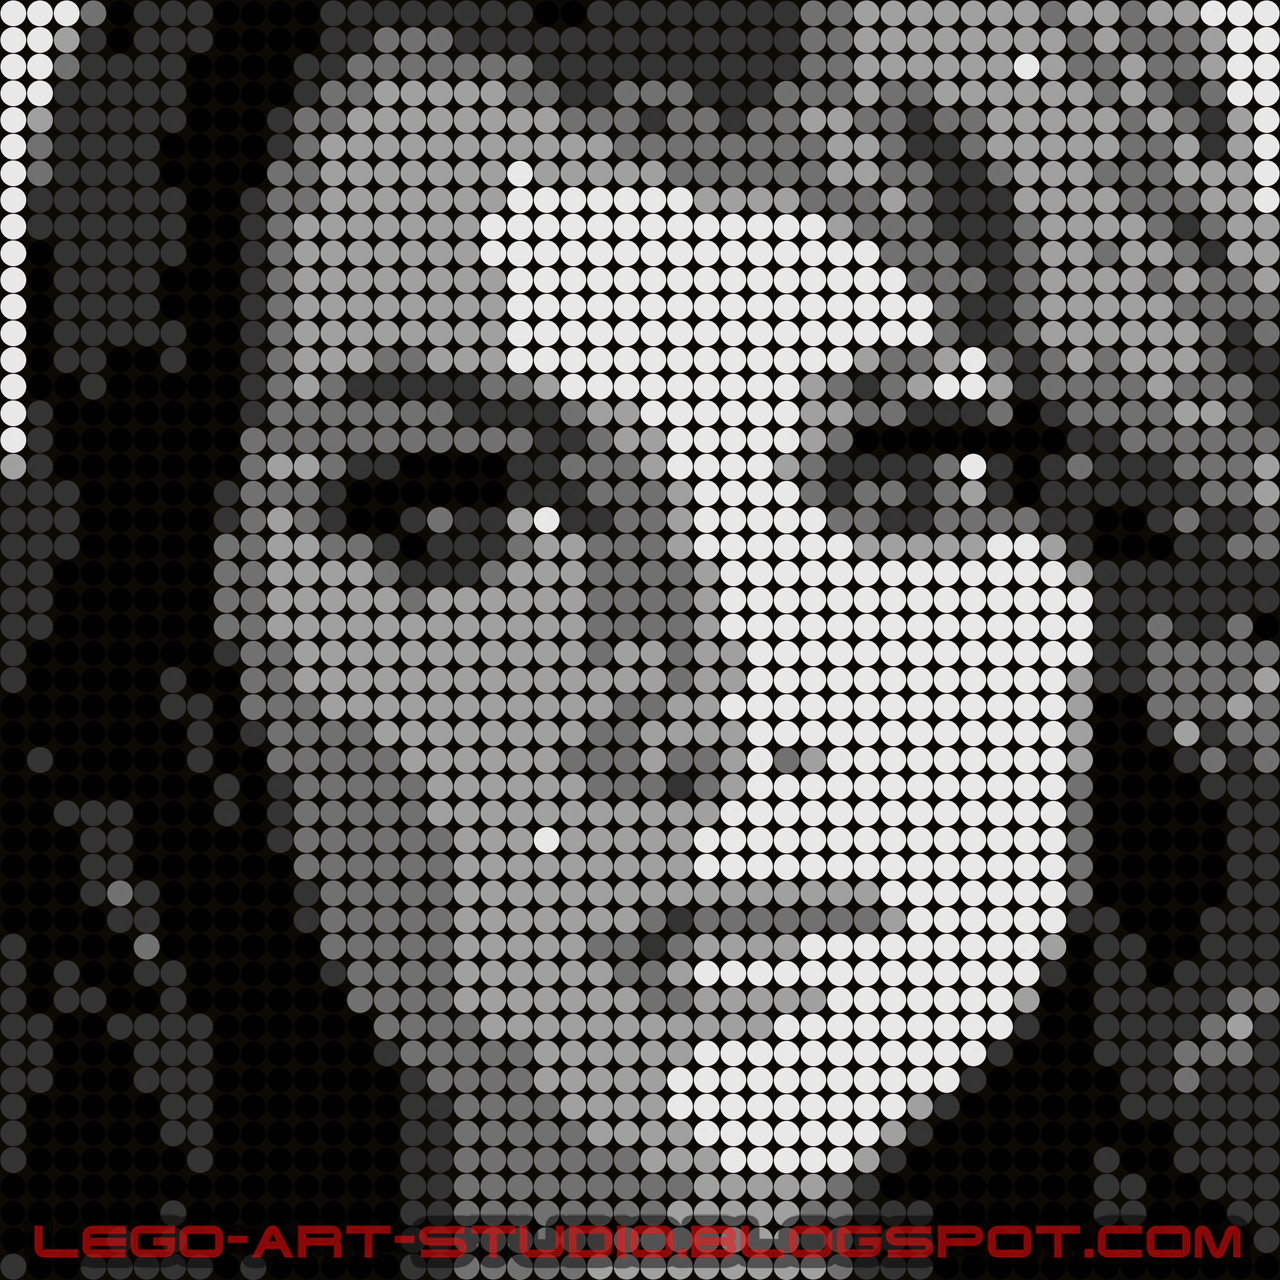 http://2.bp.blogspot.com/-_u0oDjxqwuM/TmpKEpljclI/AAAAAAAAAFA/NYcPAguGEZ0/s1600/Emma+Stone+mosaic+portrait.jpg